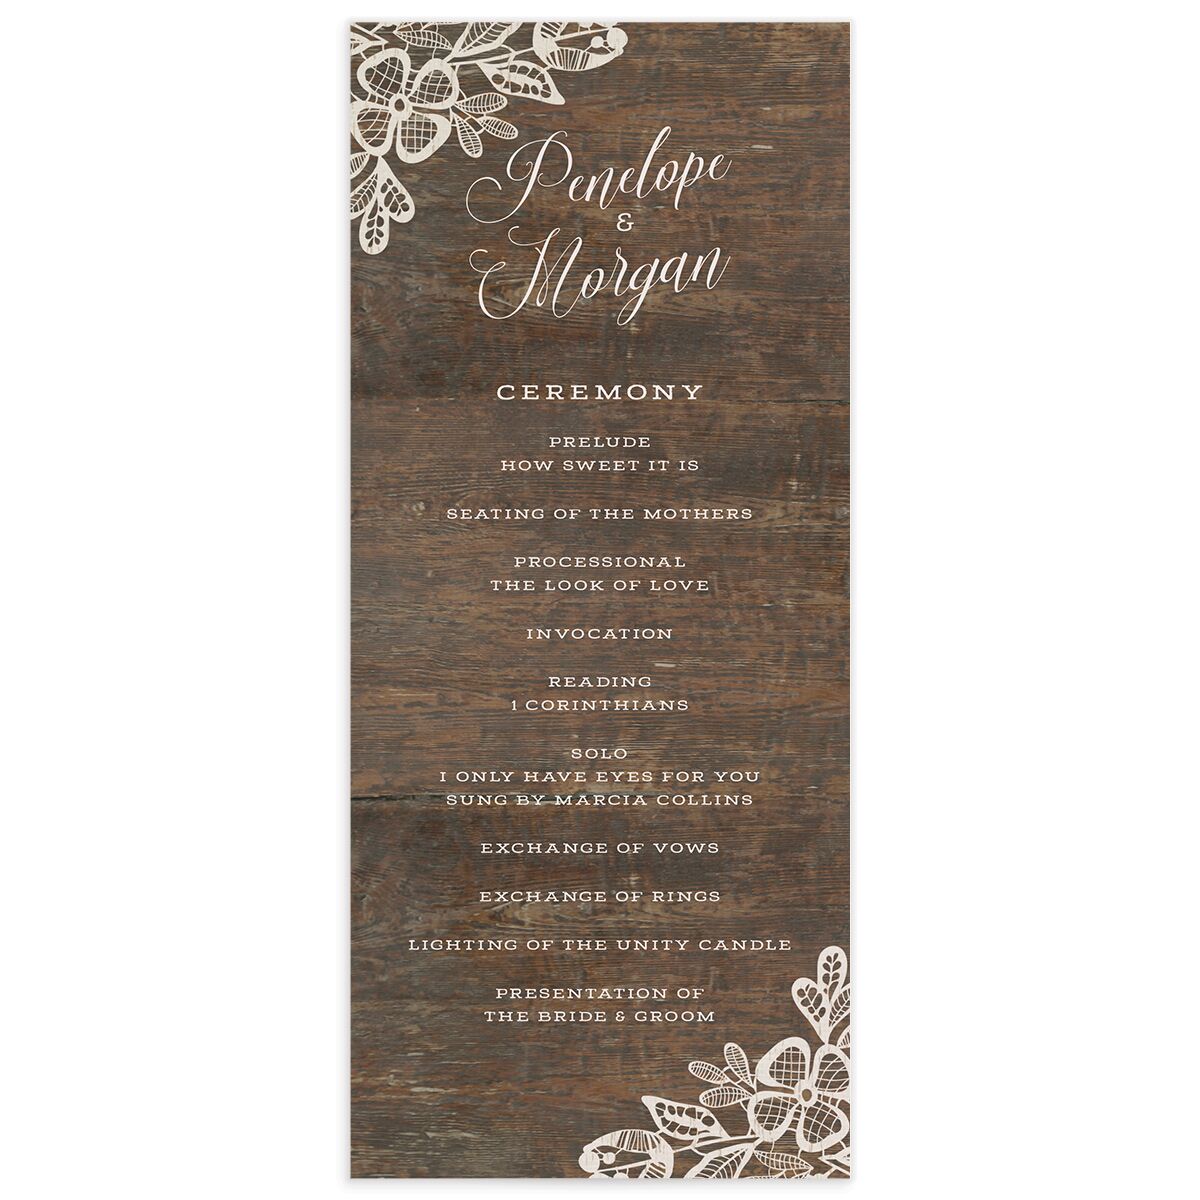 Woodgrain Lace Wedding Invitations